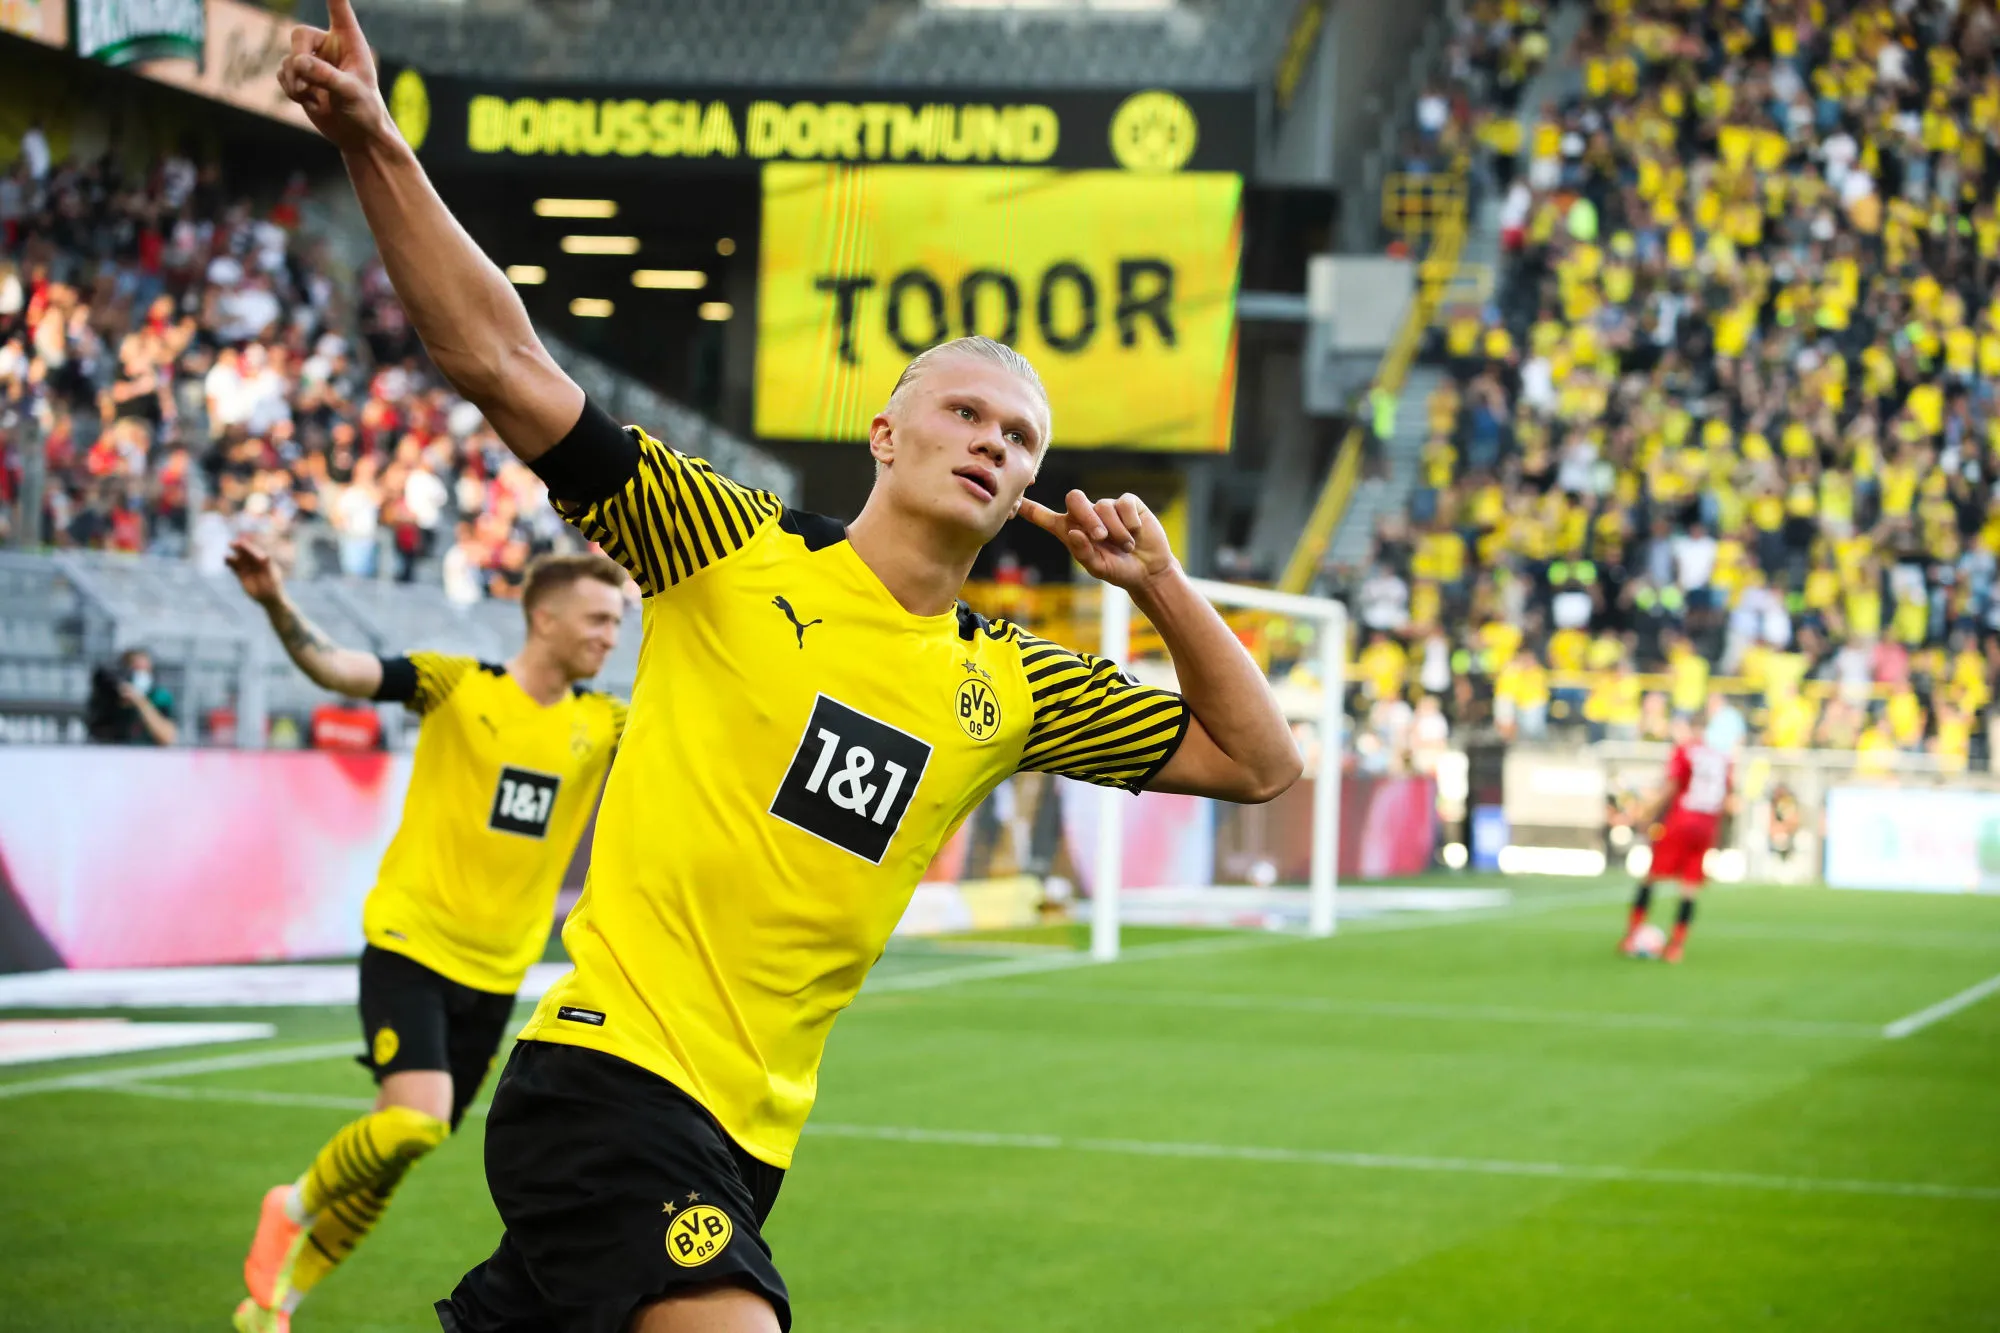 Pronostic Borussia Dortmund Fribourg : Analyse, cotes et pronostic du match de Bundesliga